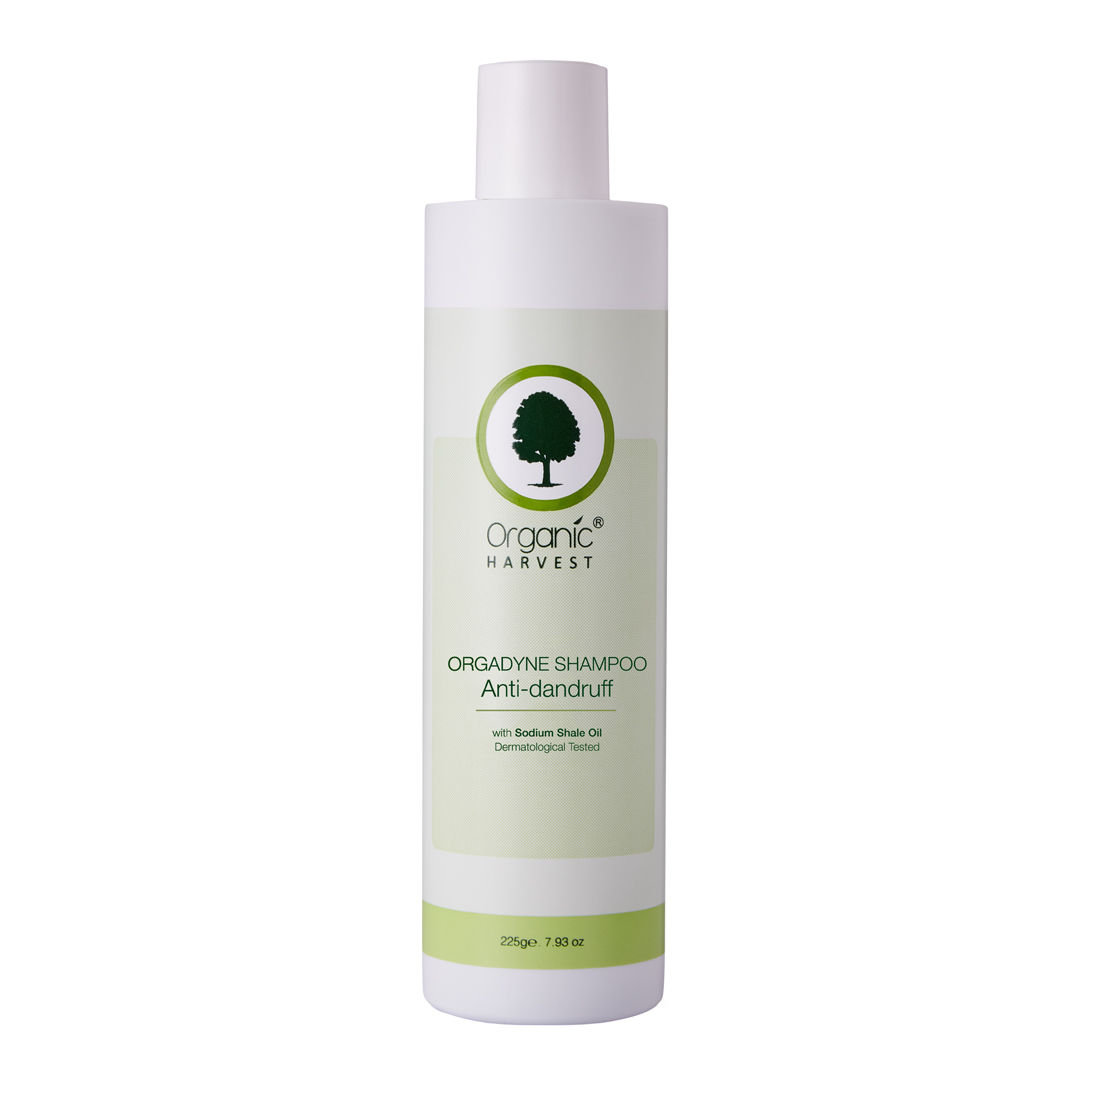 Organic Harvest Anti Dandruff Orgadyne Shampoo with Sodium Shale Oil